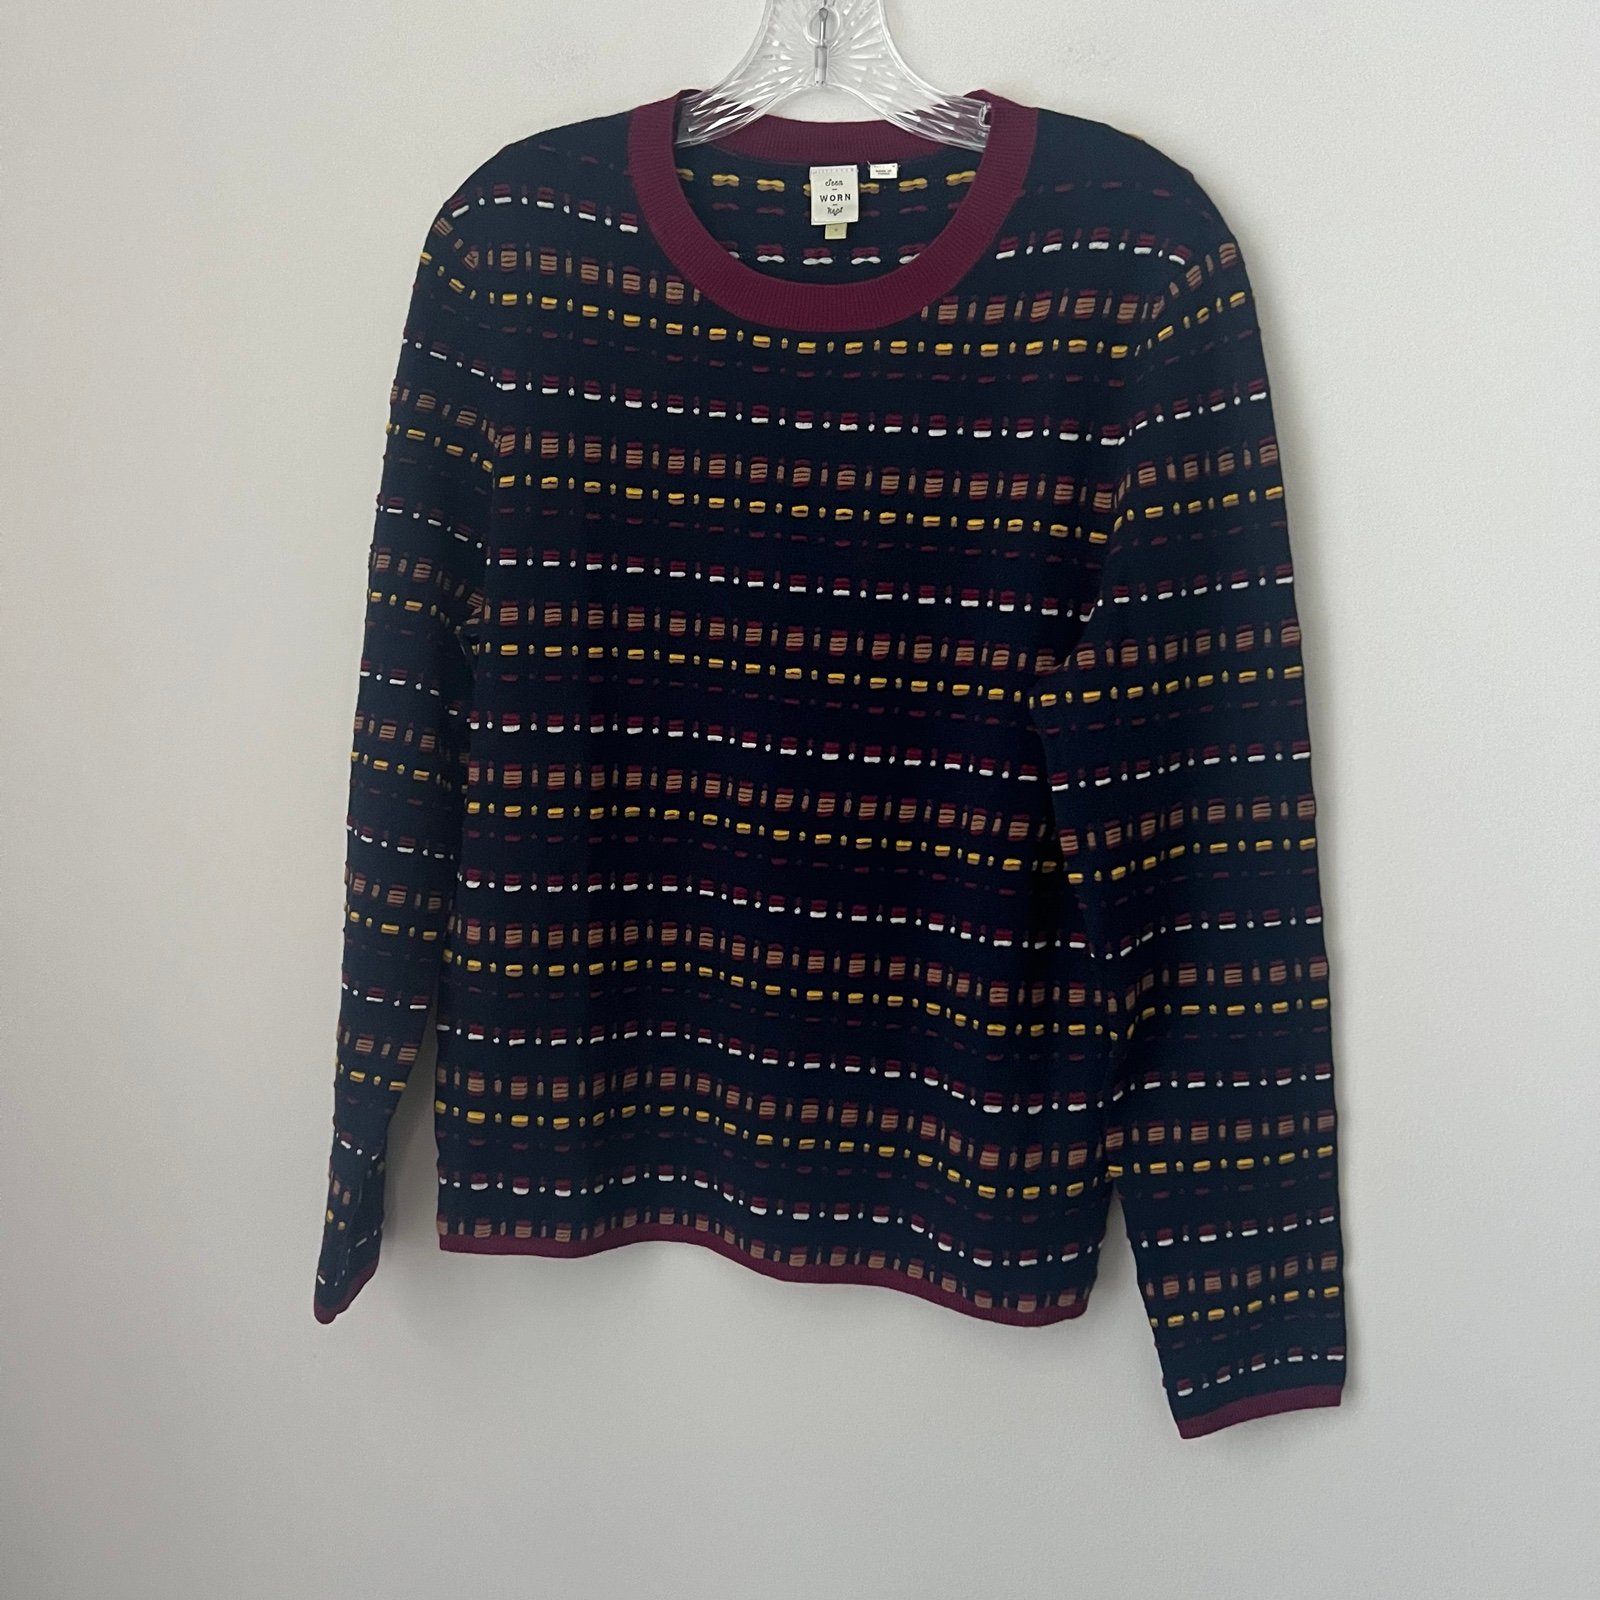 save up to 70% Anthropologie Seen Worn Kept Knit long sleeve sweater top women´s Medium nPFxJGOH9 Everyday Low Prices